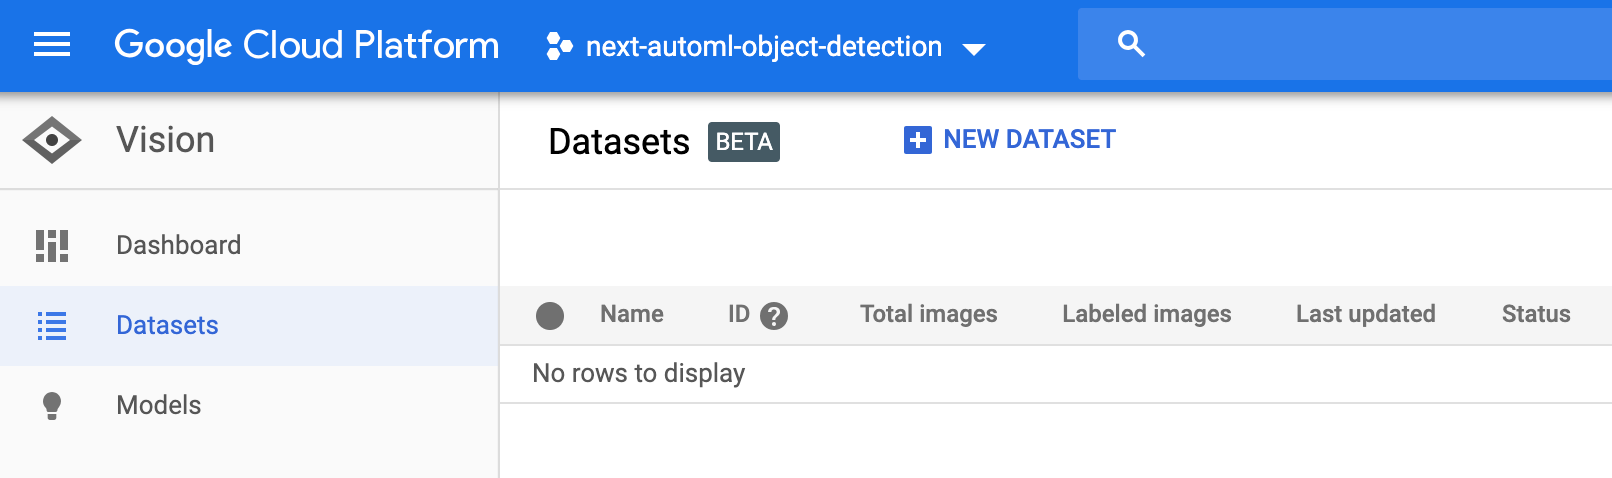 Select create new dataset